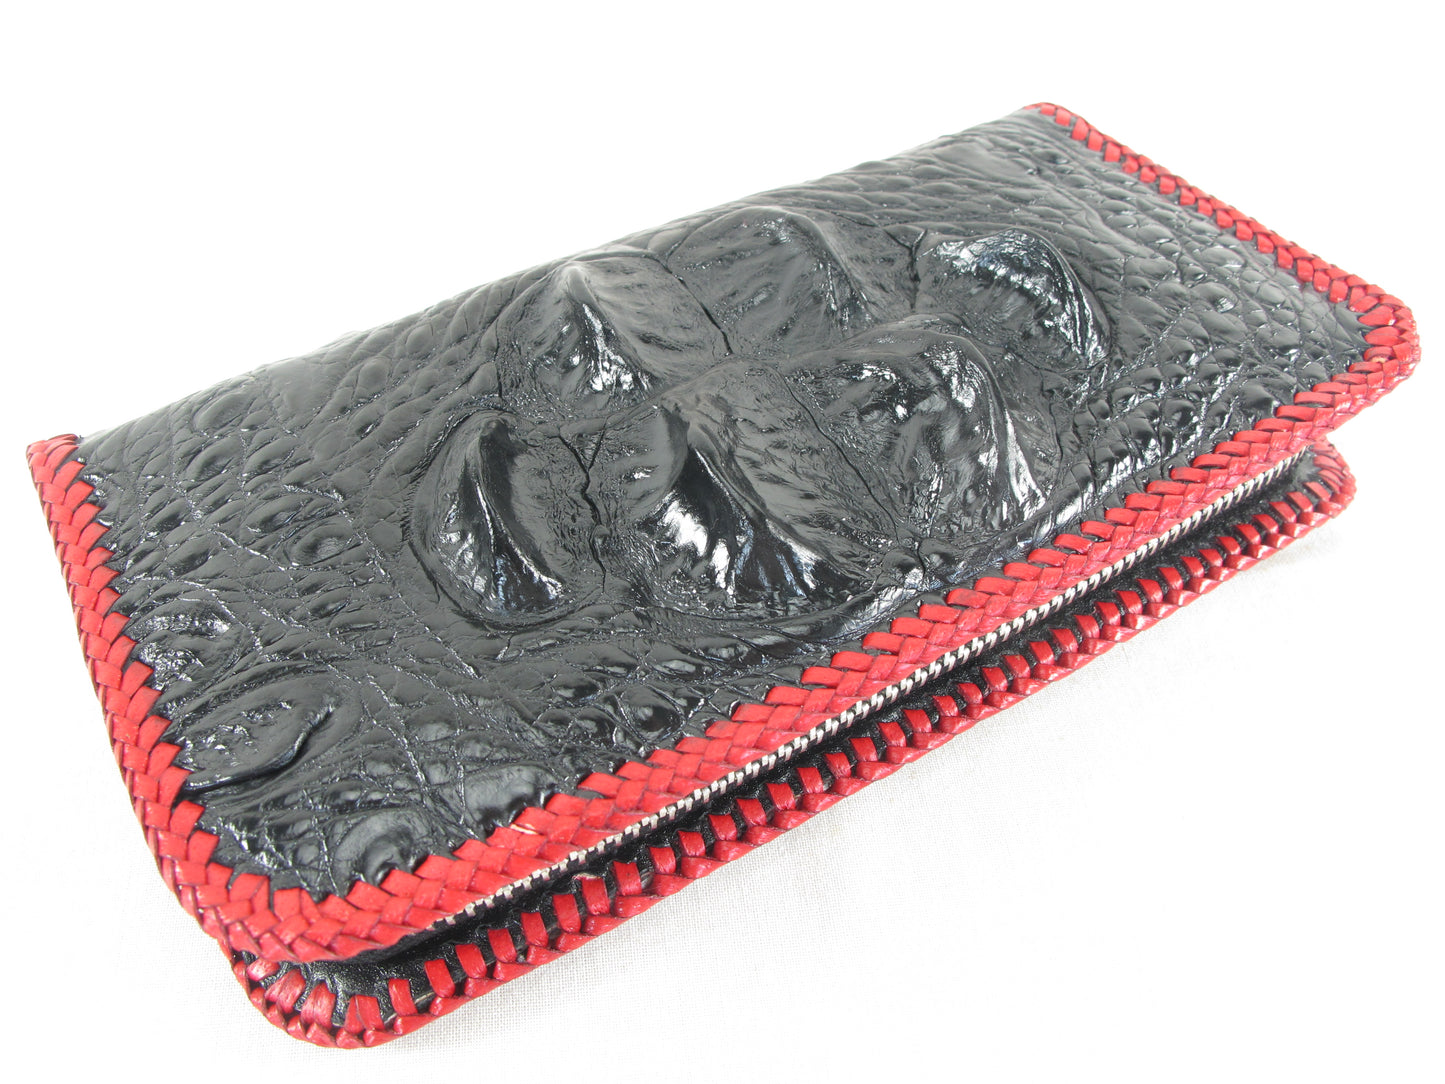 Genuine Crocodile Hornback Skin Leather Zip Around Handmade Clutch Wallet Purse with Red Trim